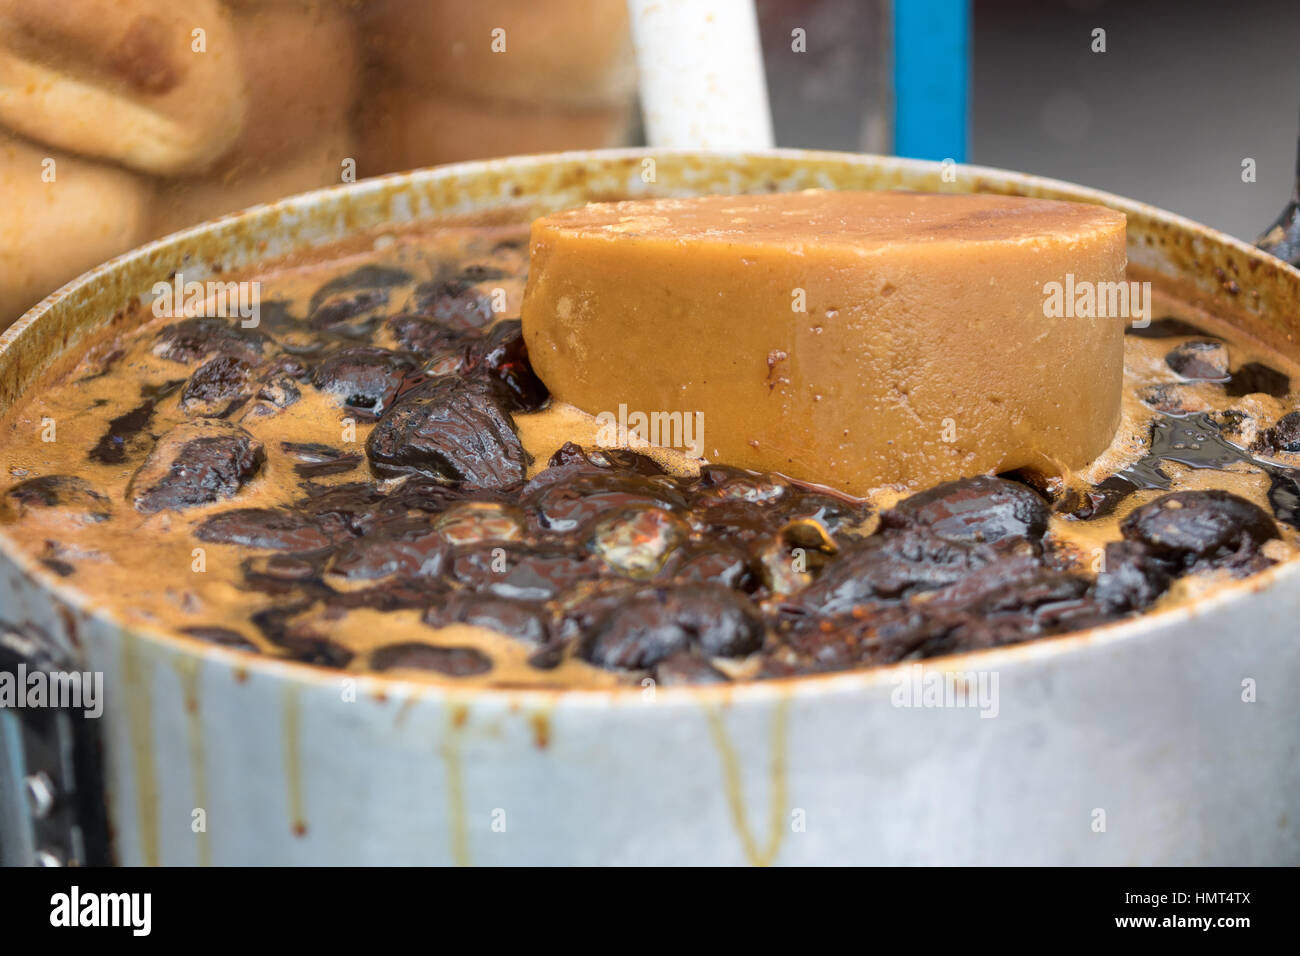 Ecuadorian street food, figs in sugar syrup Stock Photo